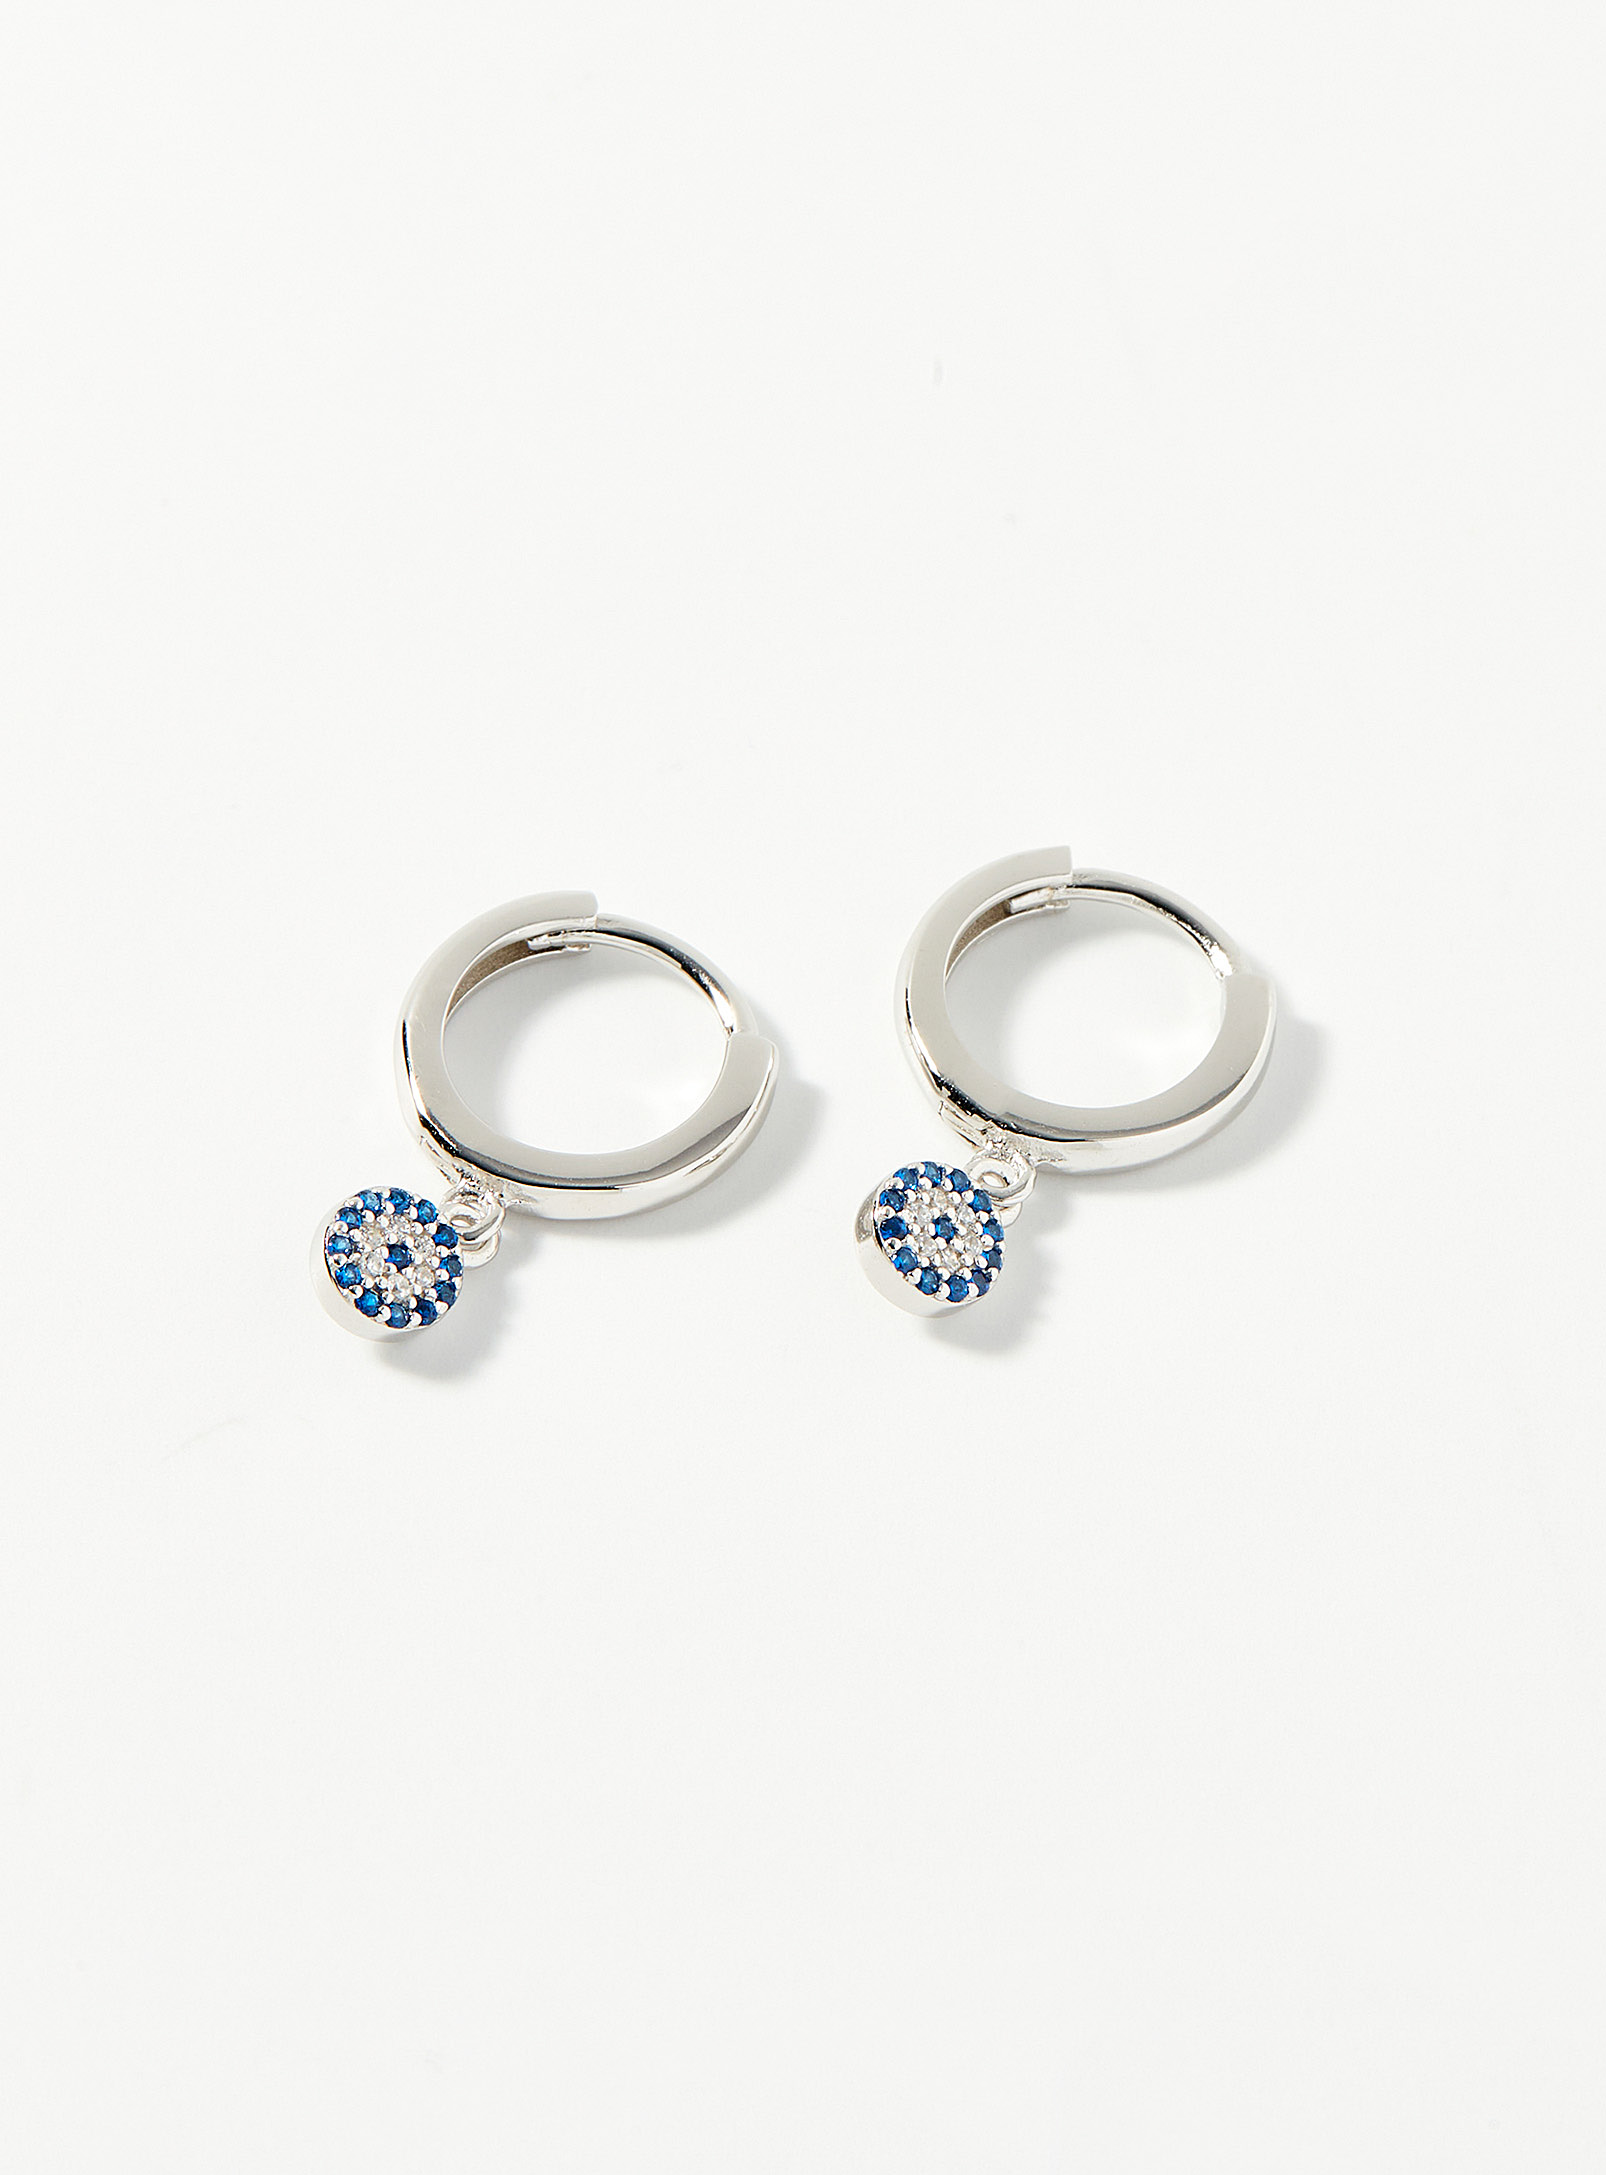 Simons - Women's Royal blue stone earrings